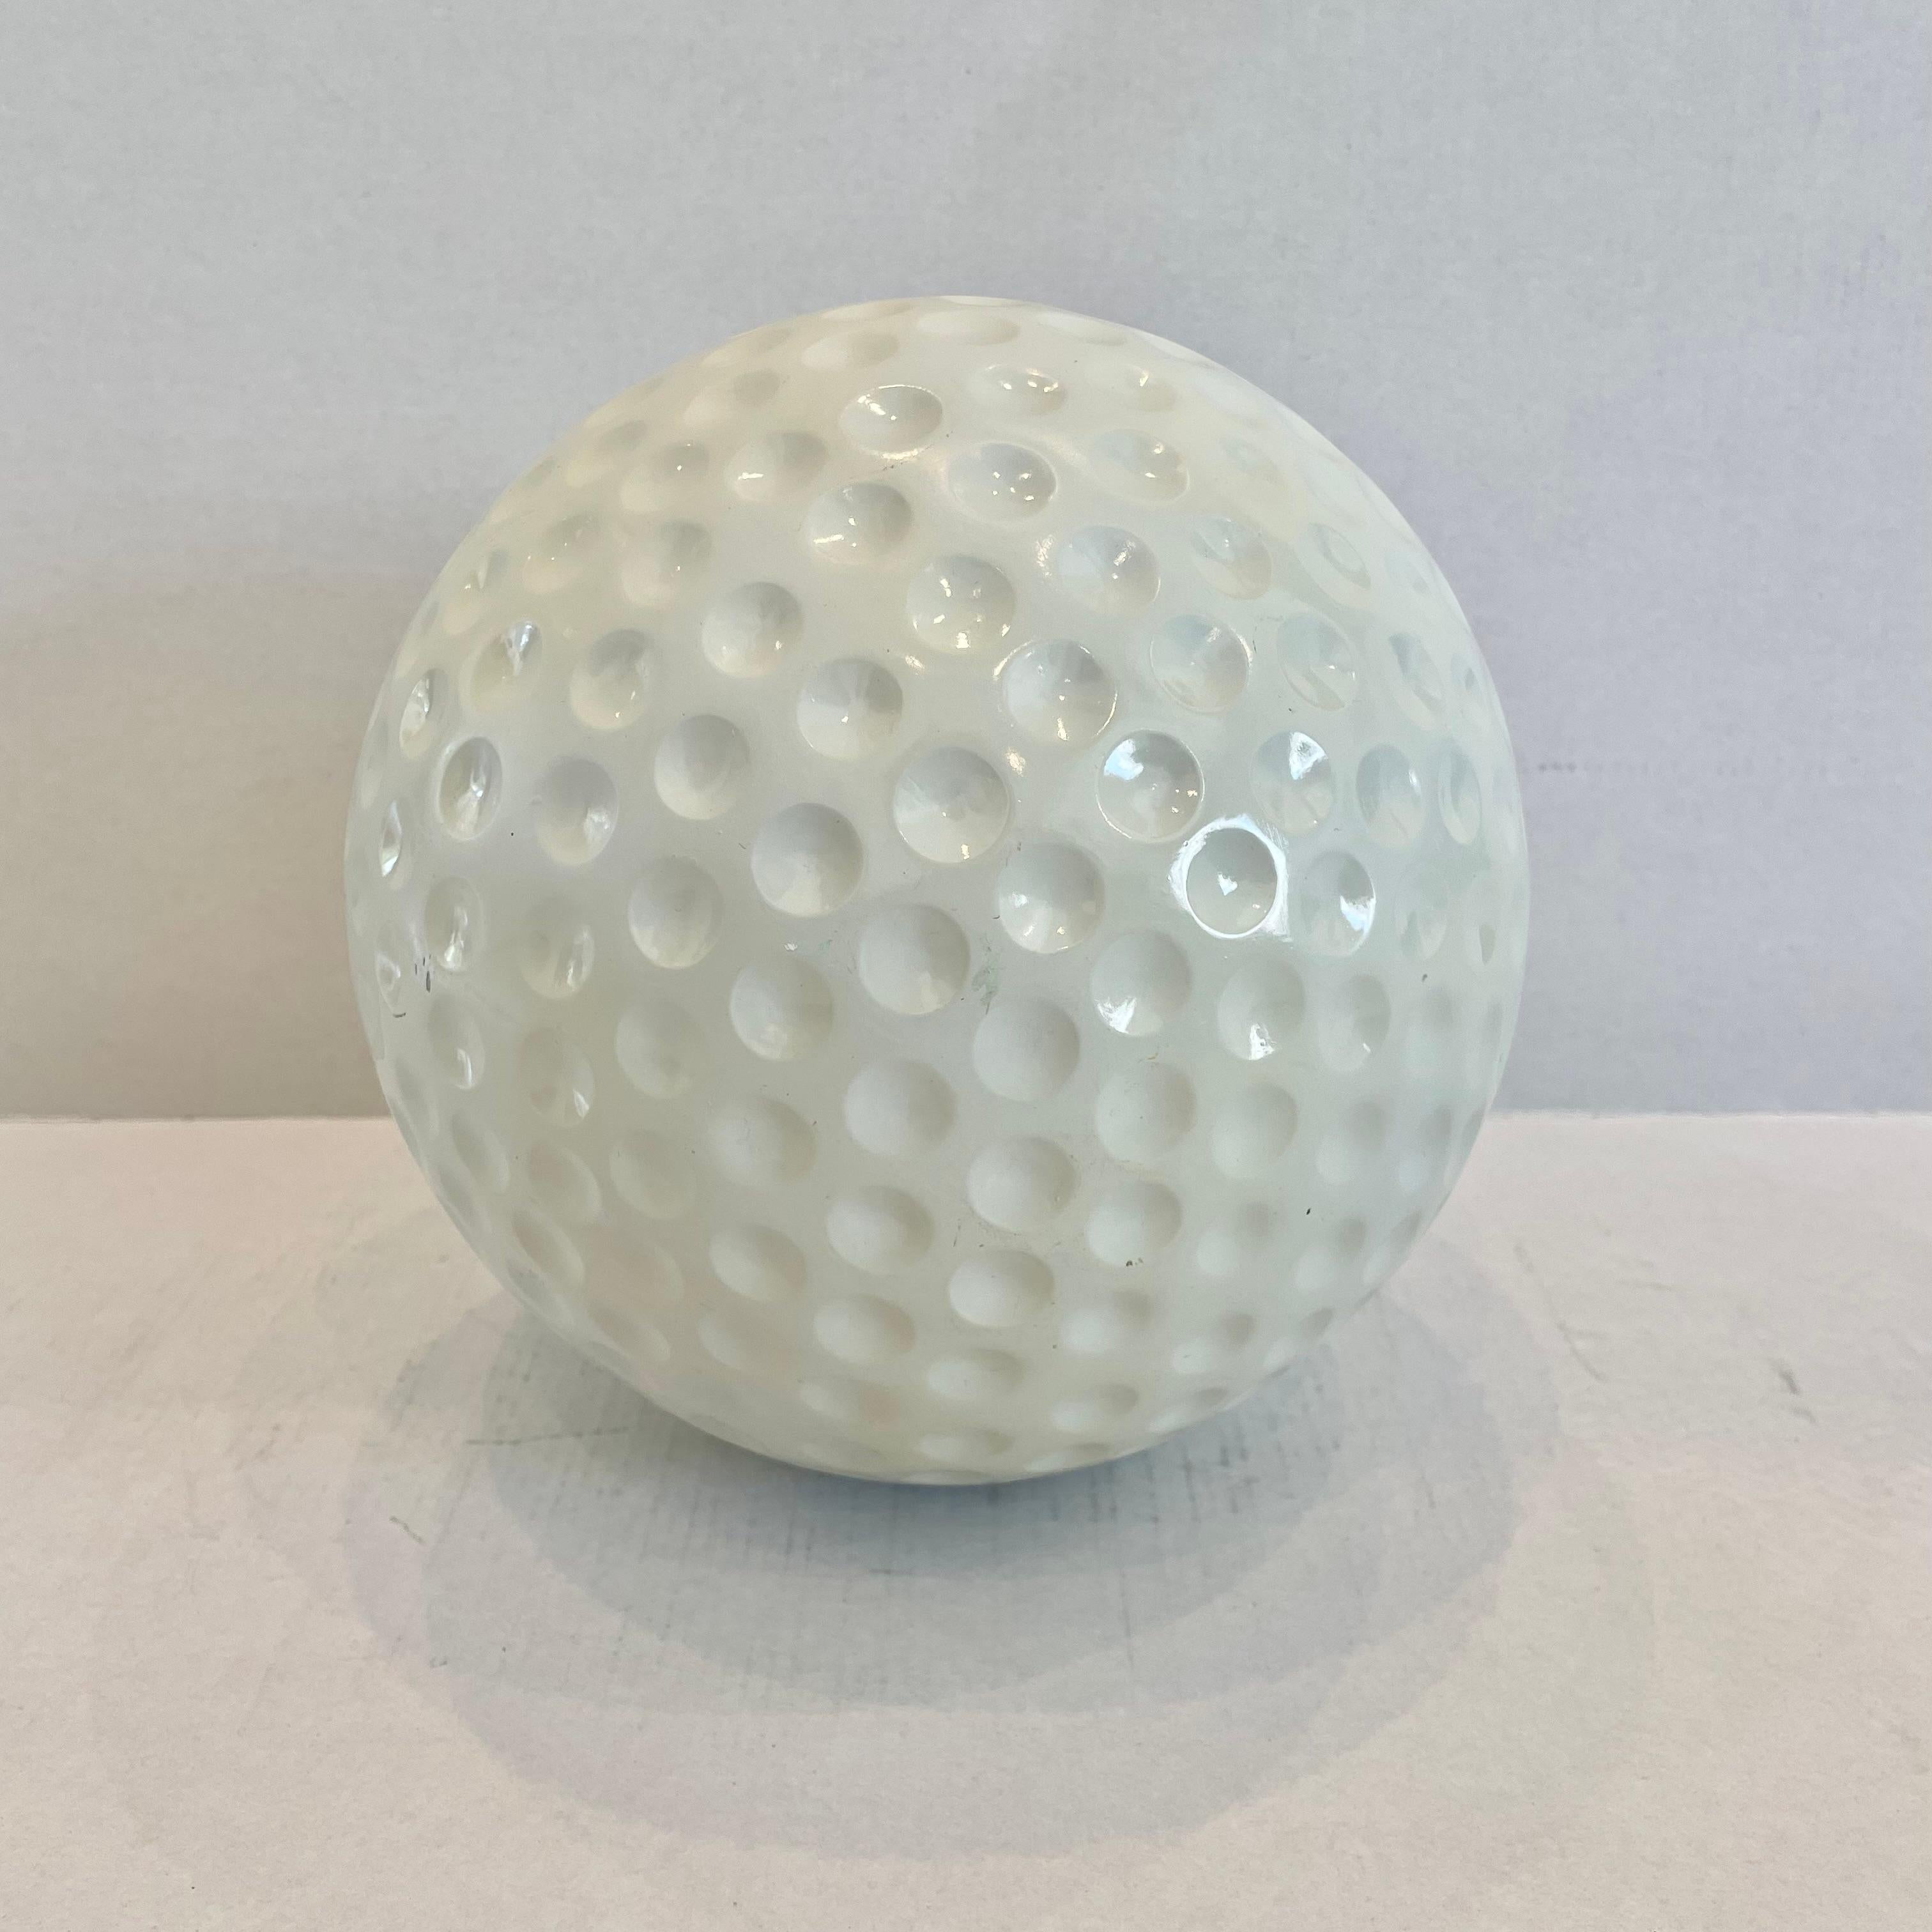 Giant vintage golfball in cream plaster/plastic. 8.5